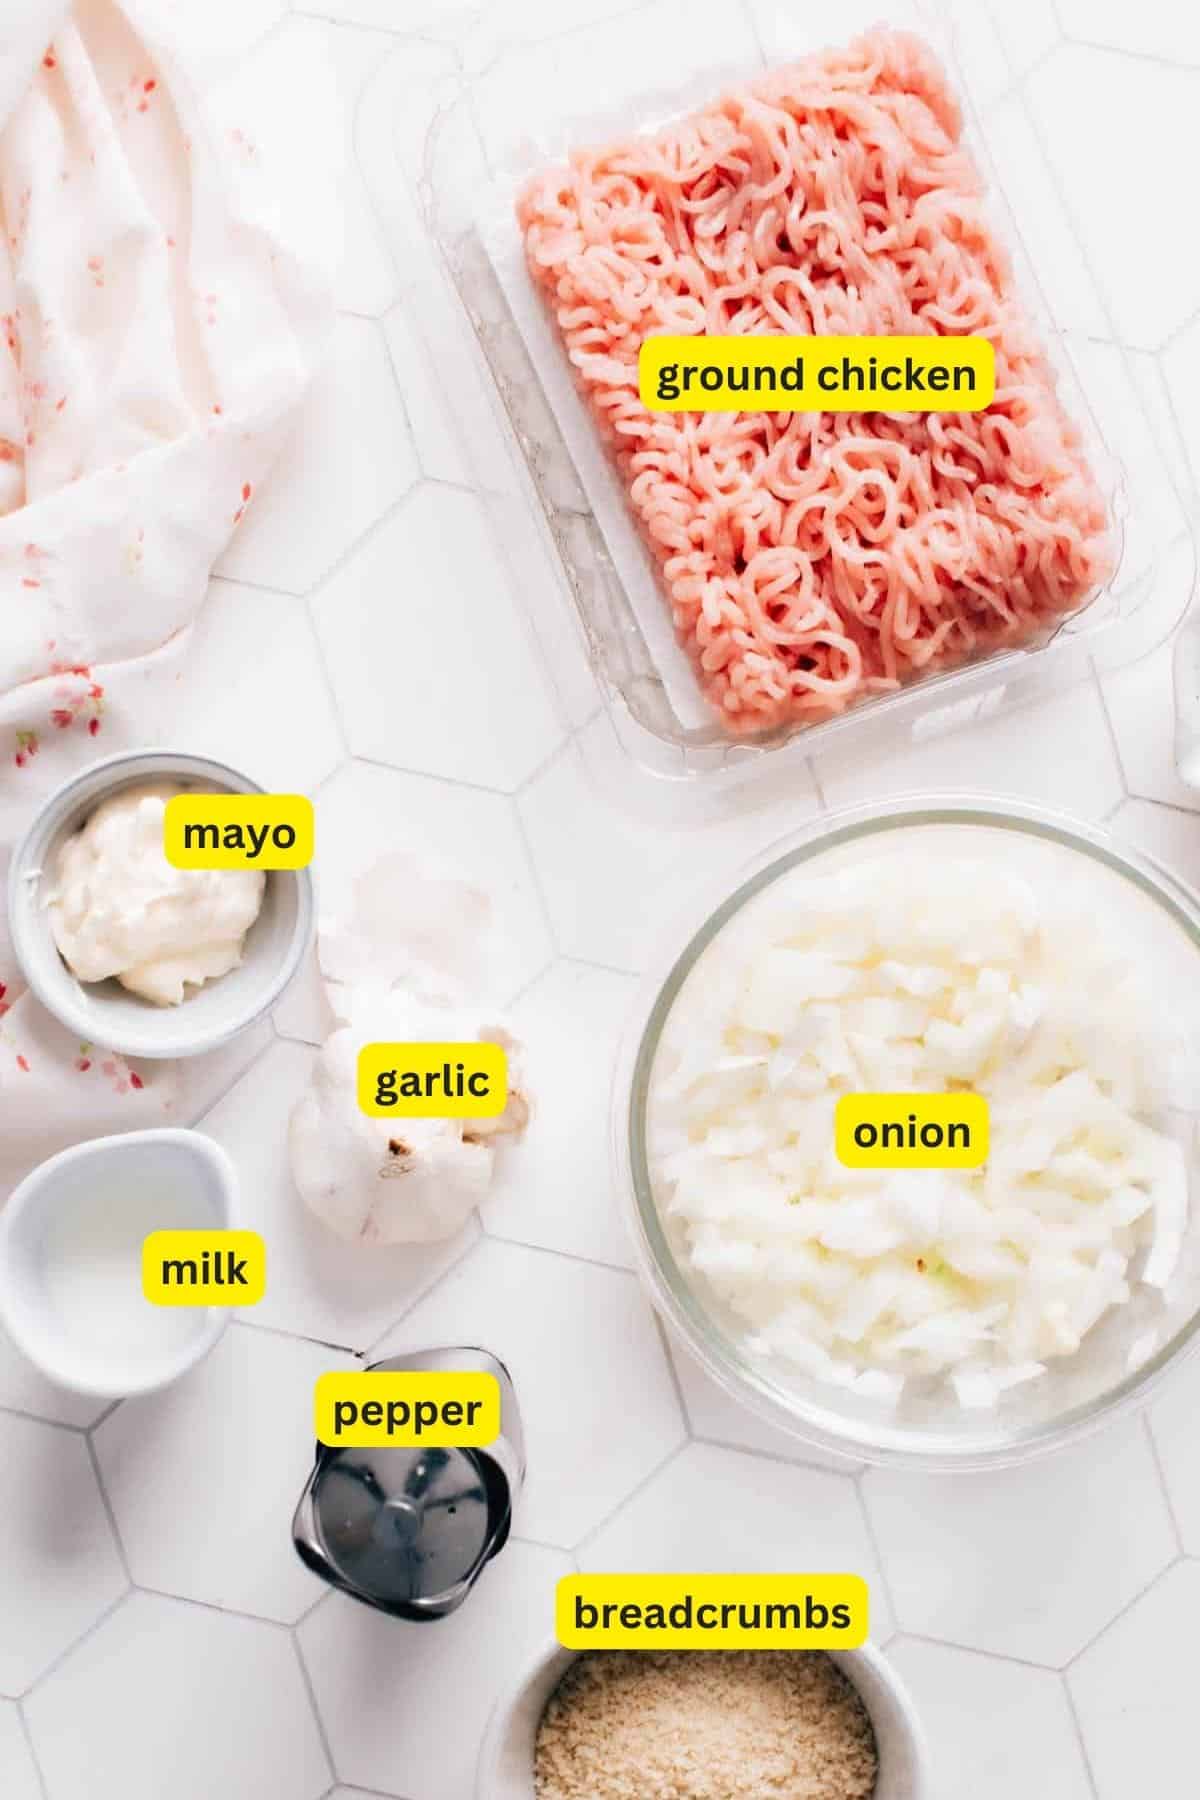 Ingredients for ground chicken burgers, including ground chicken, breadcrumbs, garlic, mayo, onion, pepper, and milk.